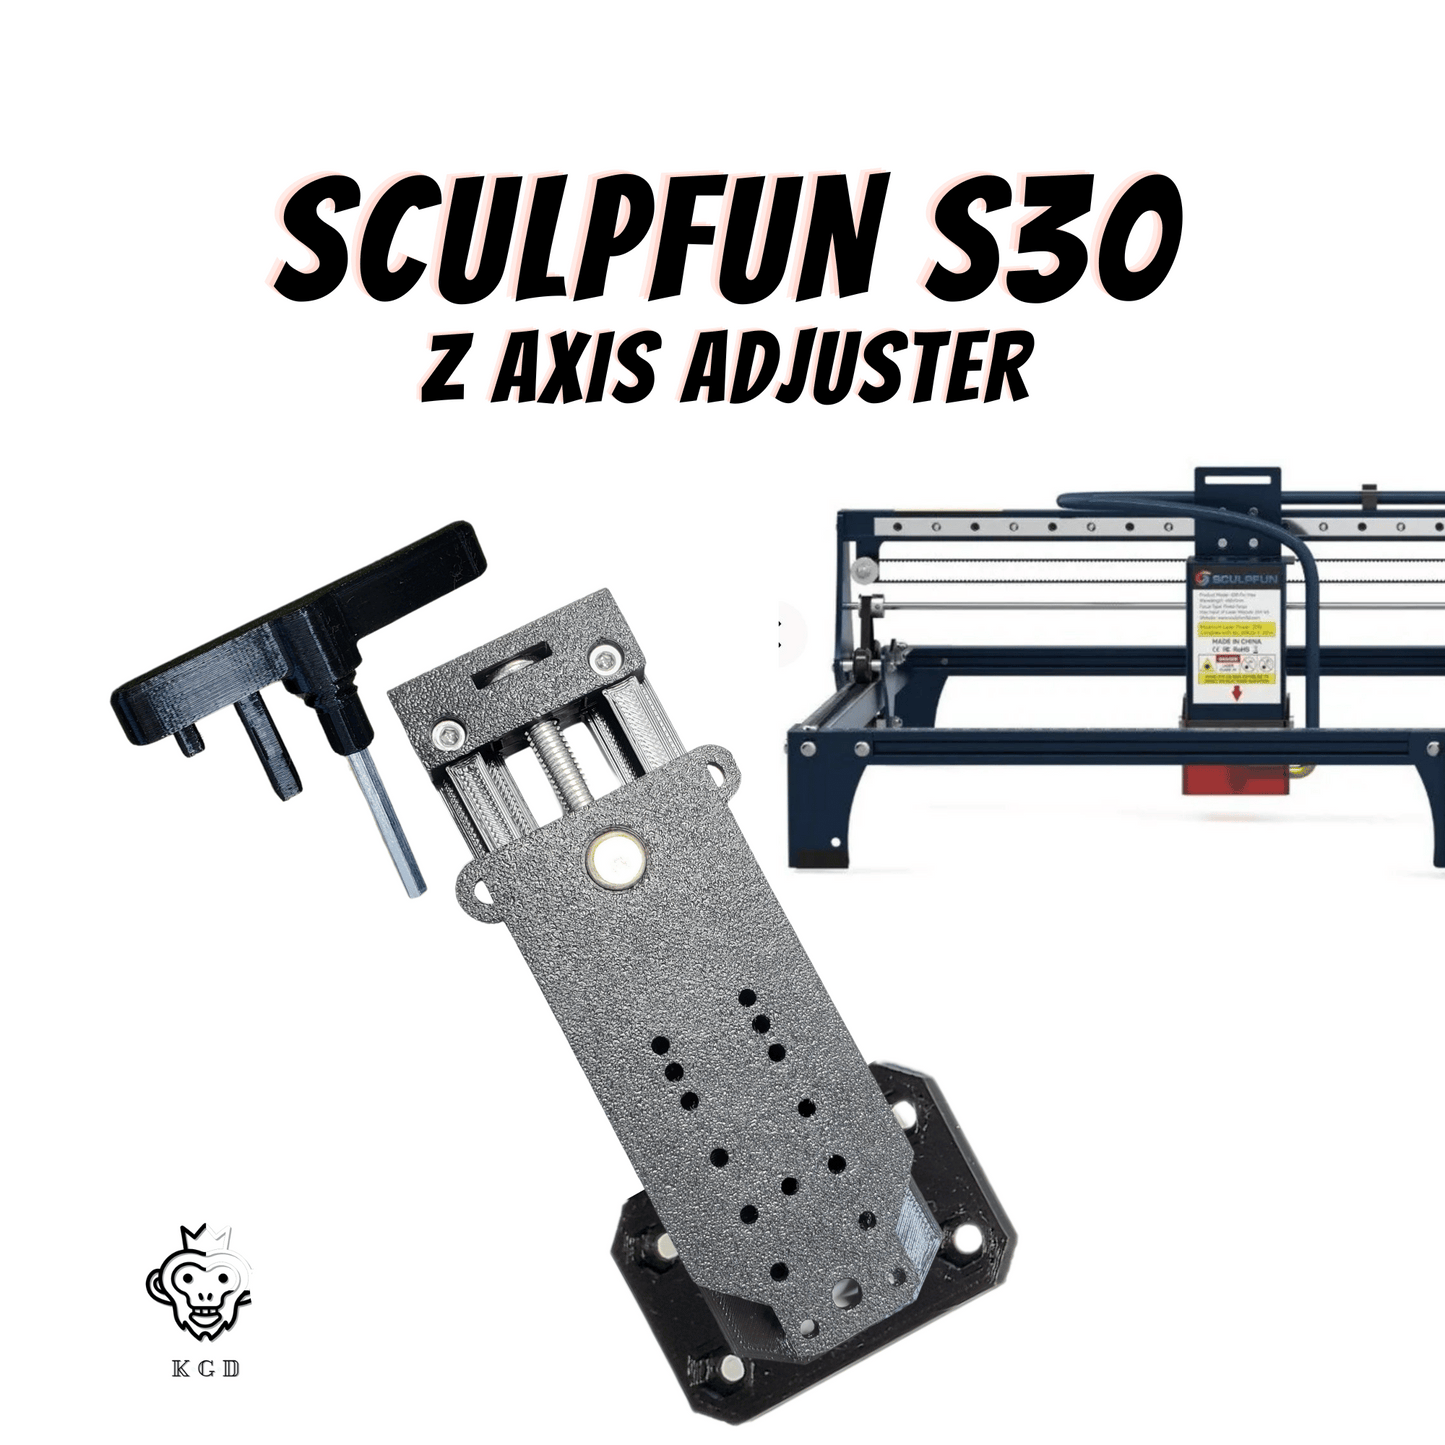 Sculpfun S30 Z Axis Adjuster